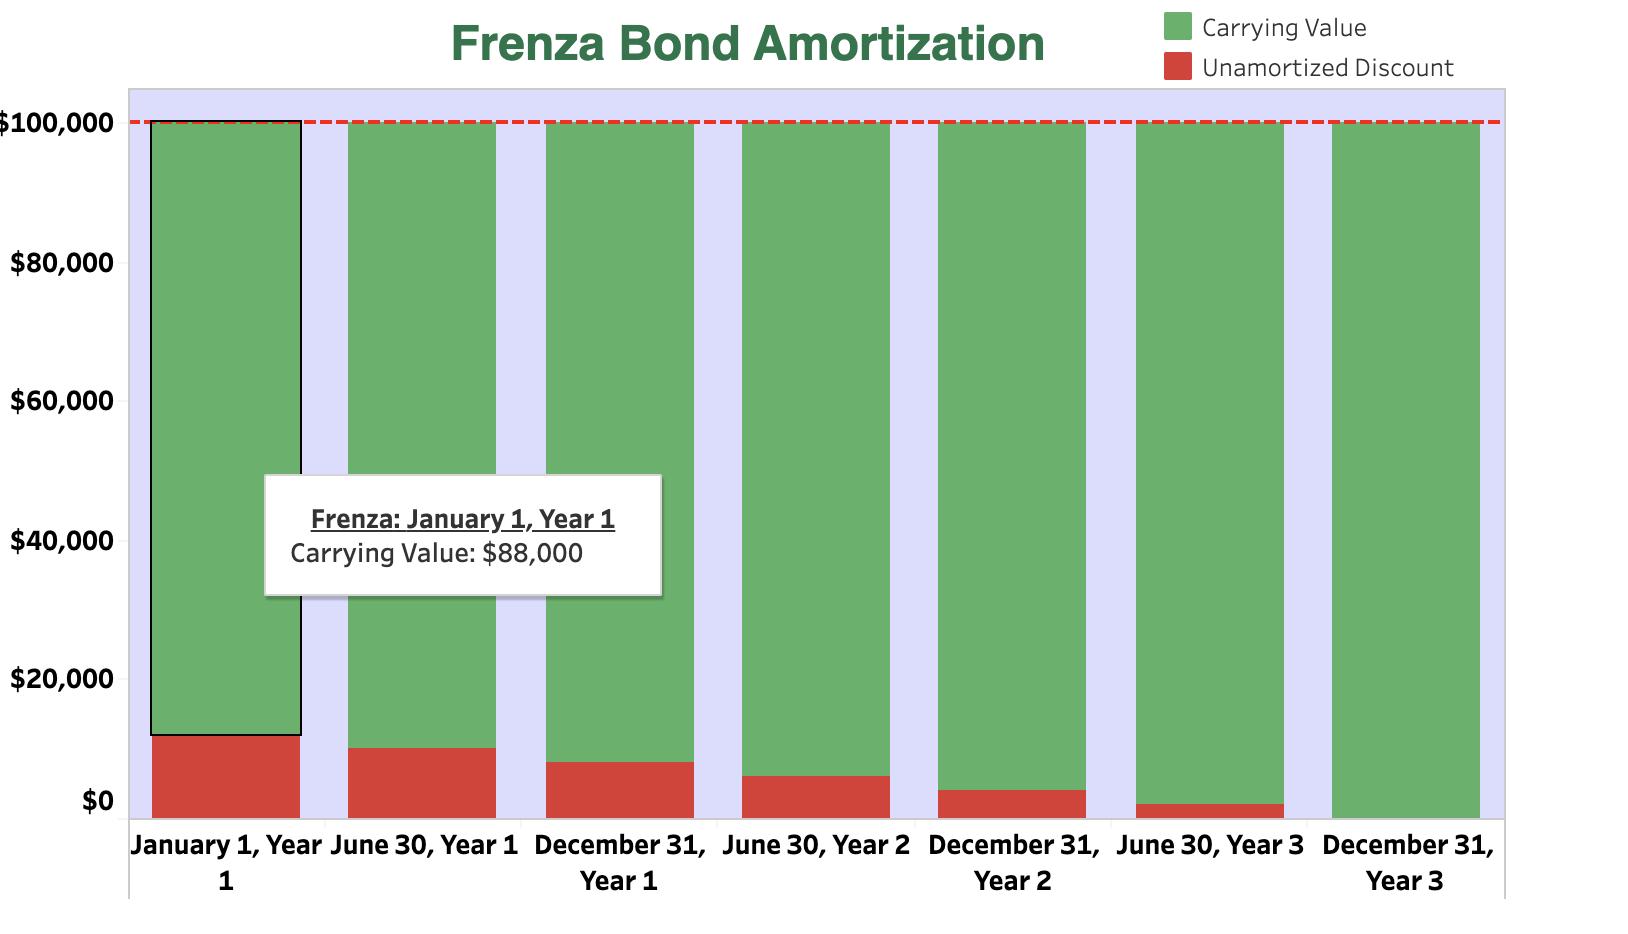 Frenza Bond Amortization Carrying Value Unamortized Discount $100,000 $80,000 $60,000 $40,000 Frenza: January 1, Year 1 Carry